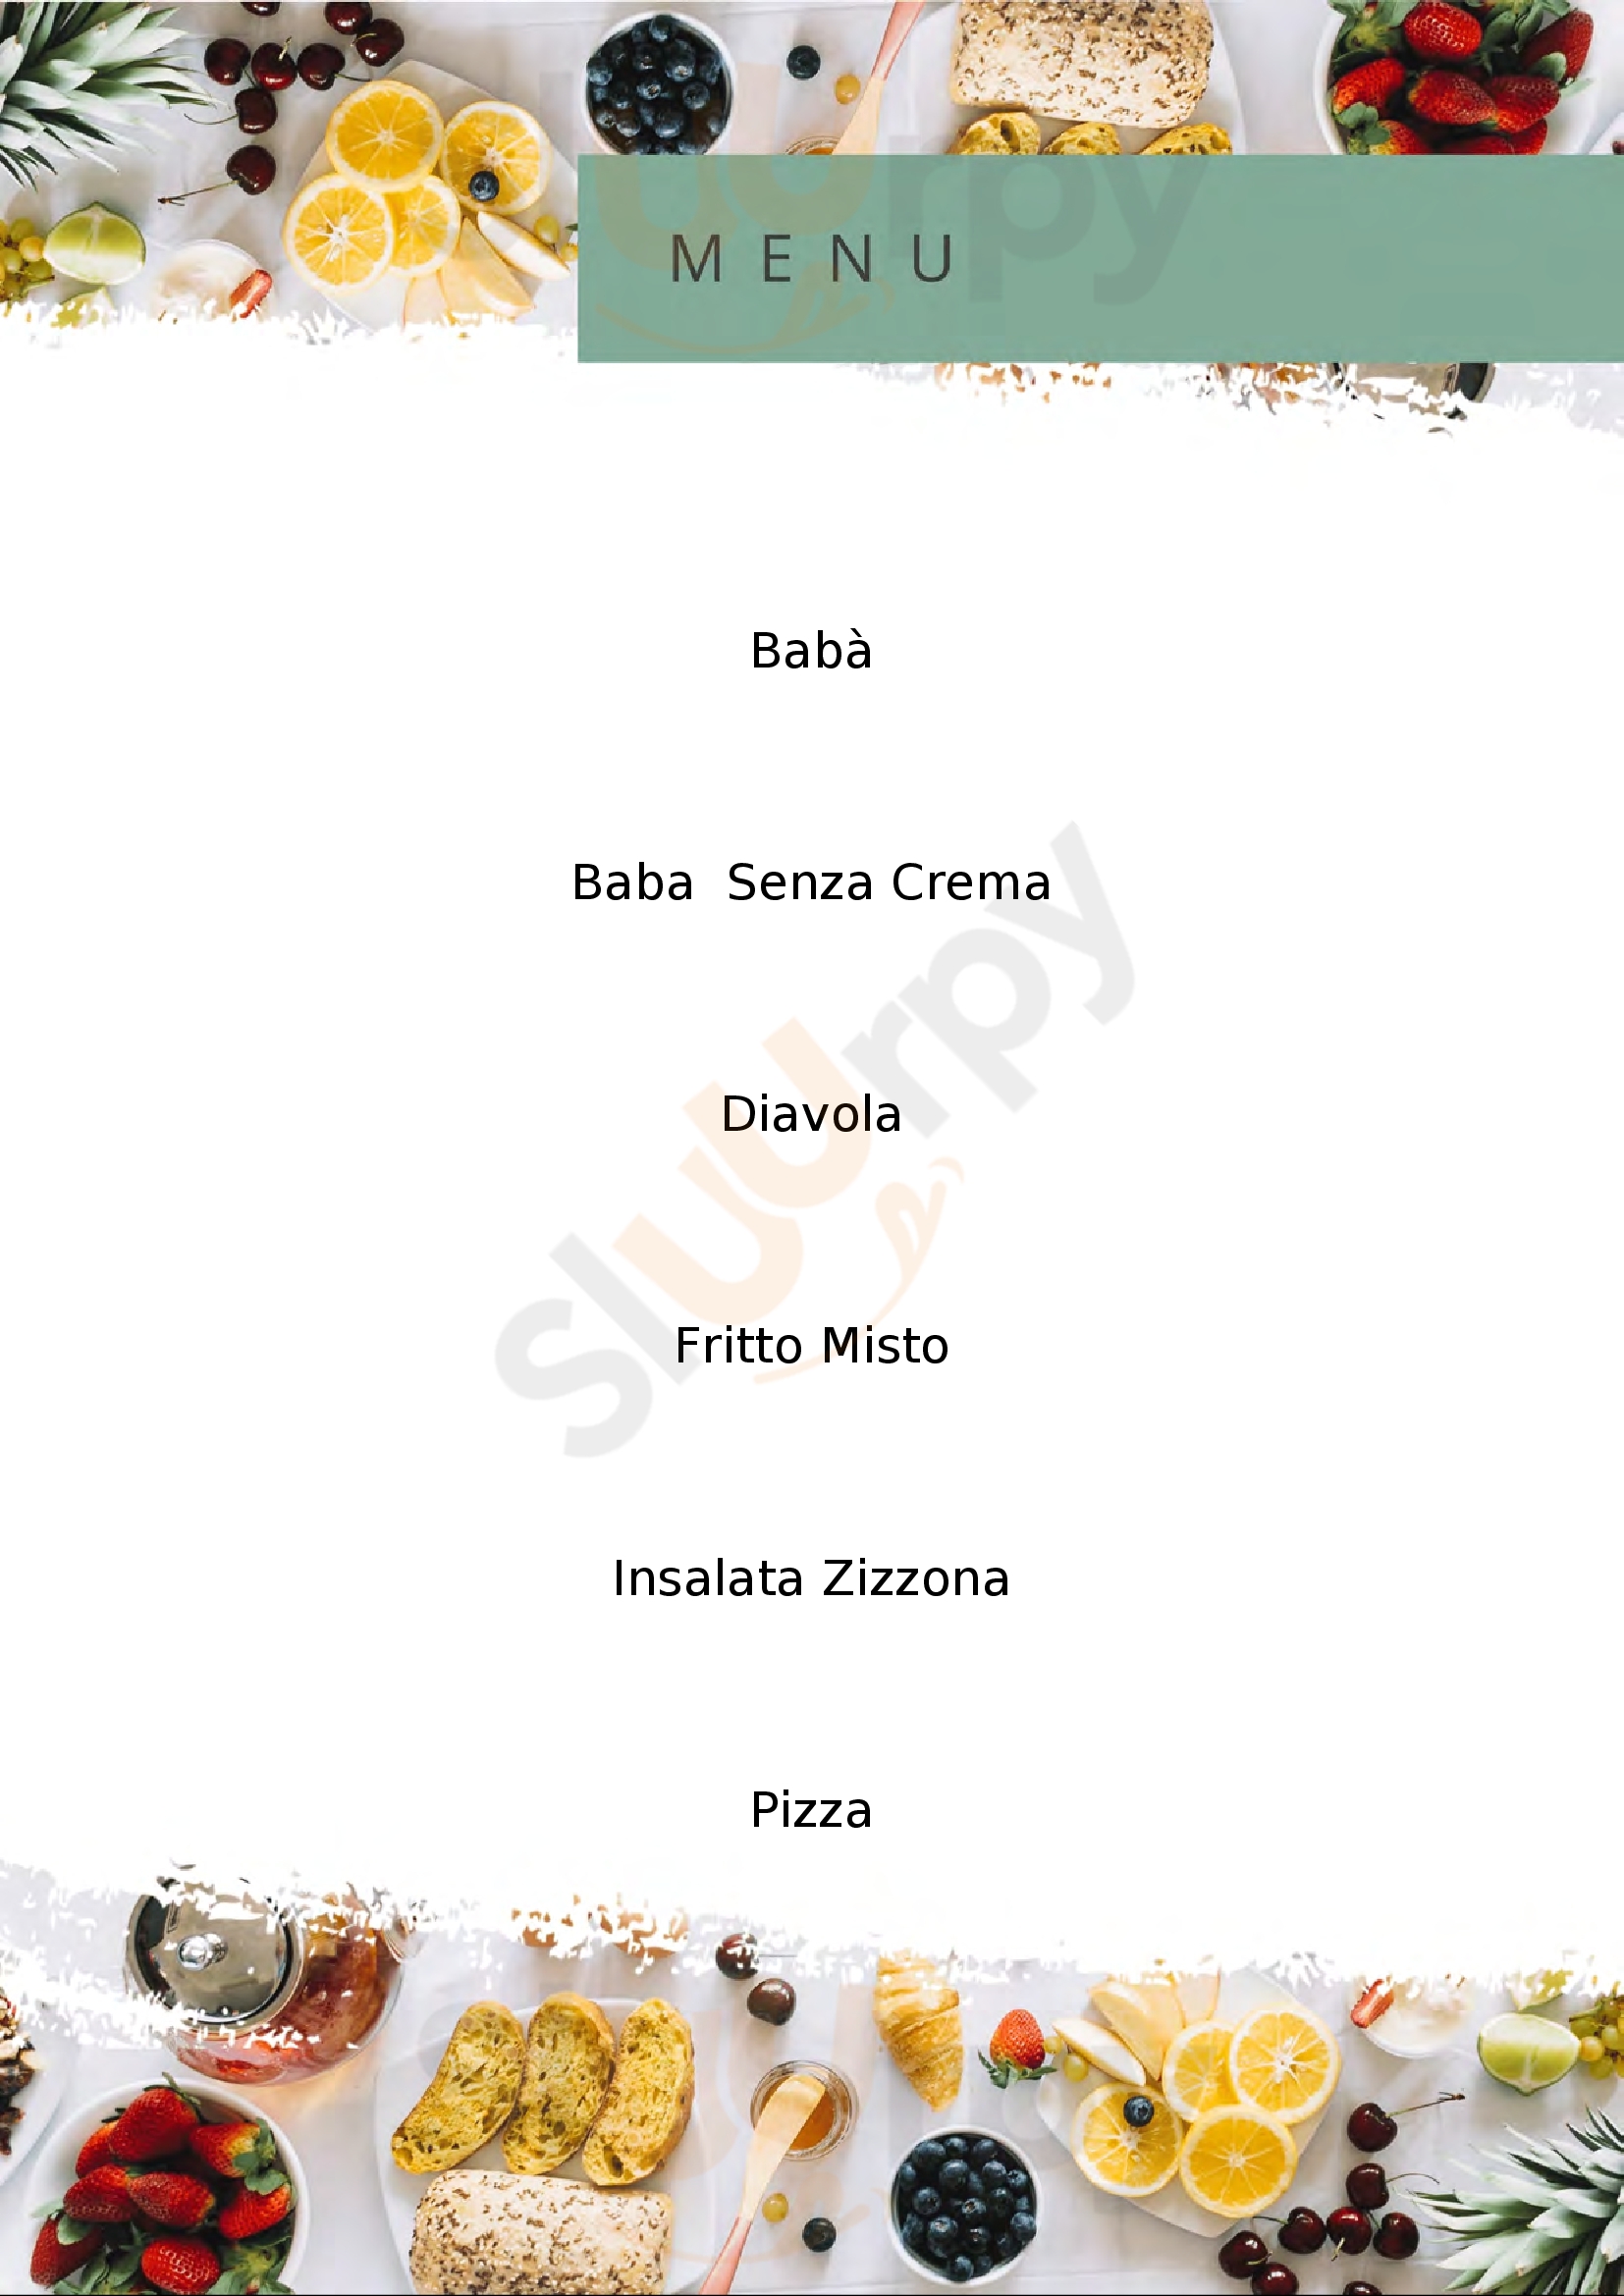 Le Fofo Pizzeria Bistrot Napoletano Forli menù 1 pagina